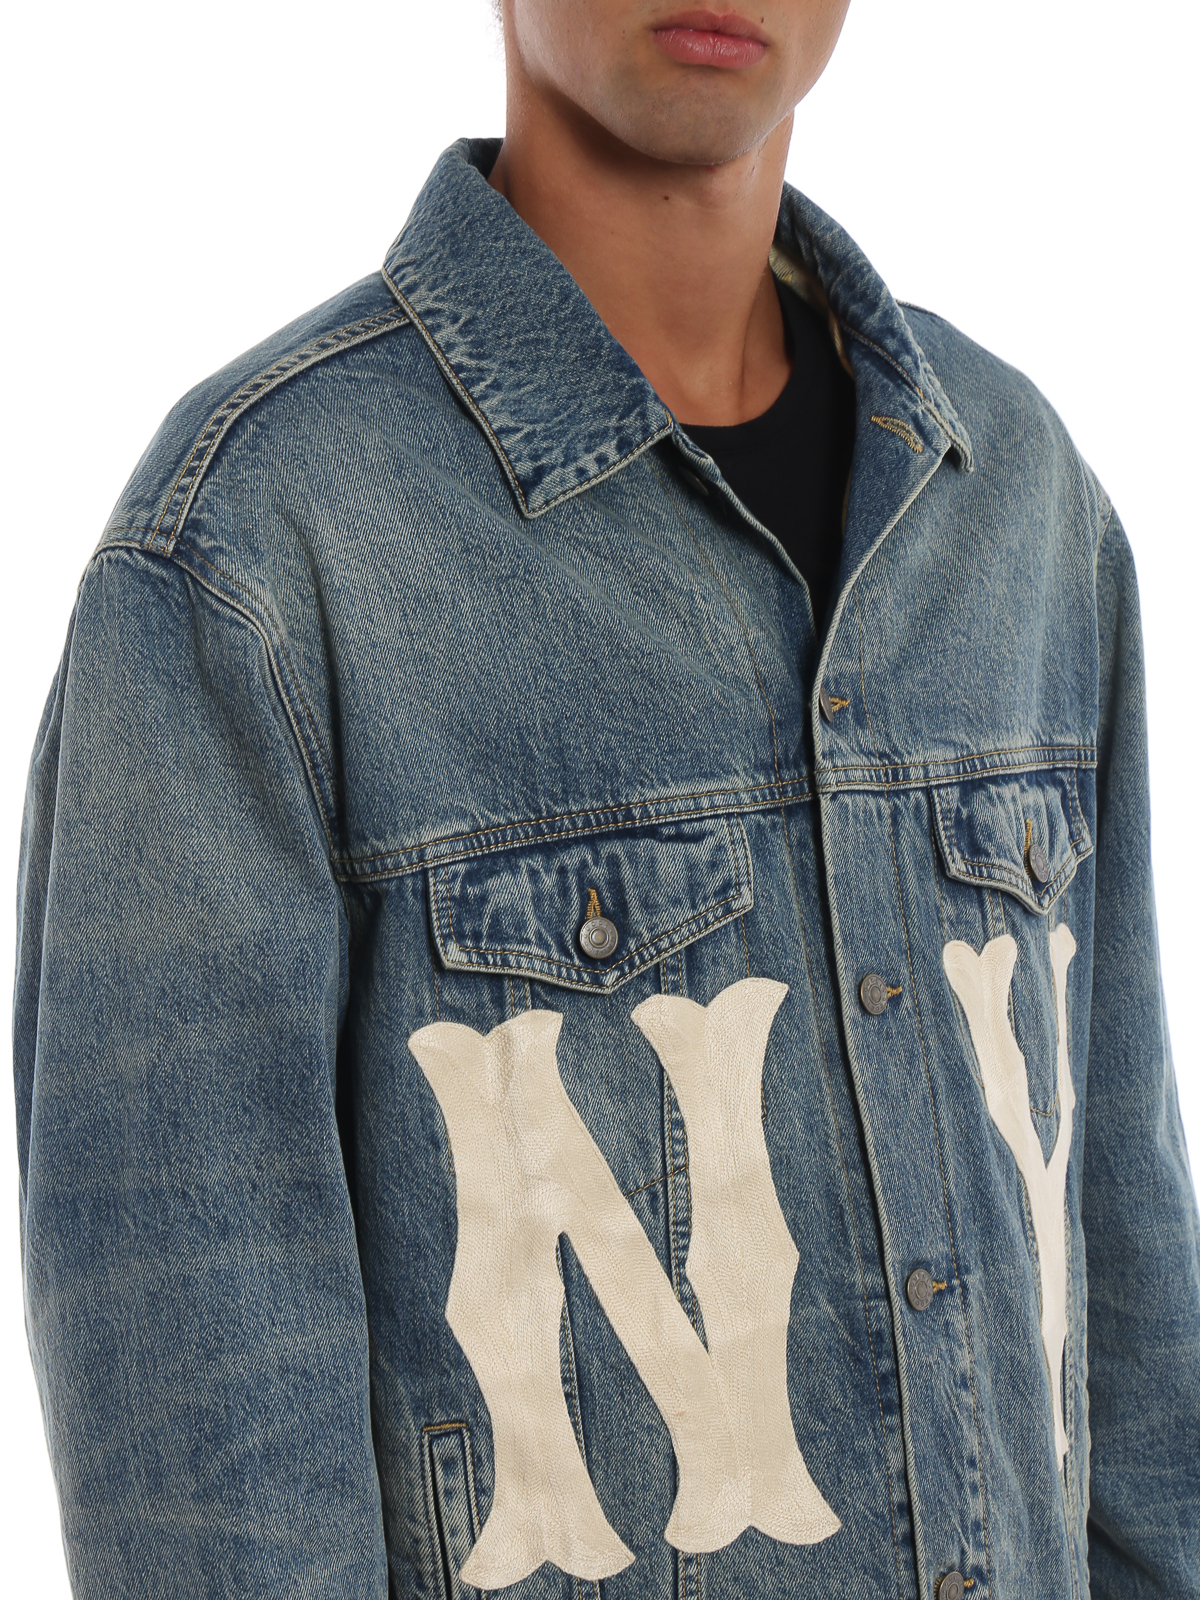 new york yankees jean jacket